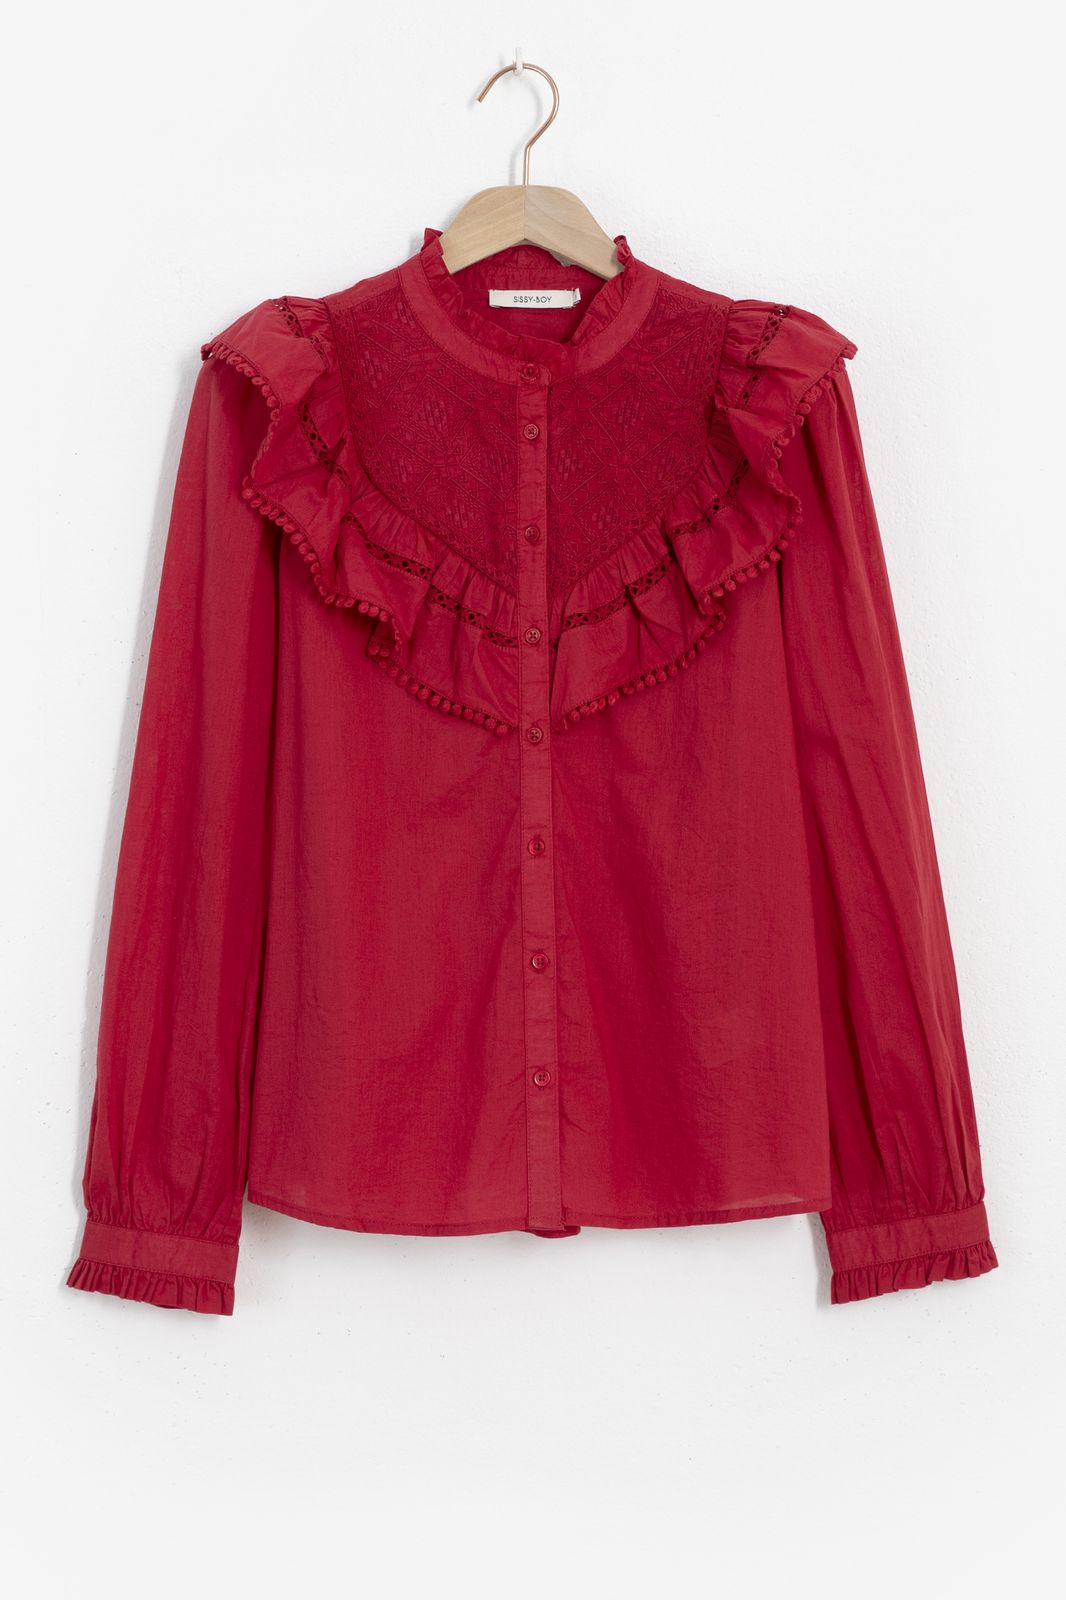 Rode blouse met kanten details en ruffles